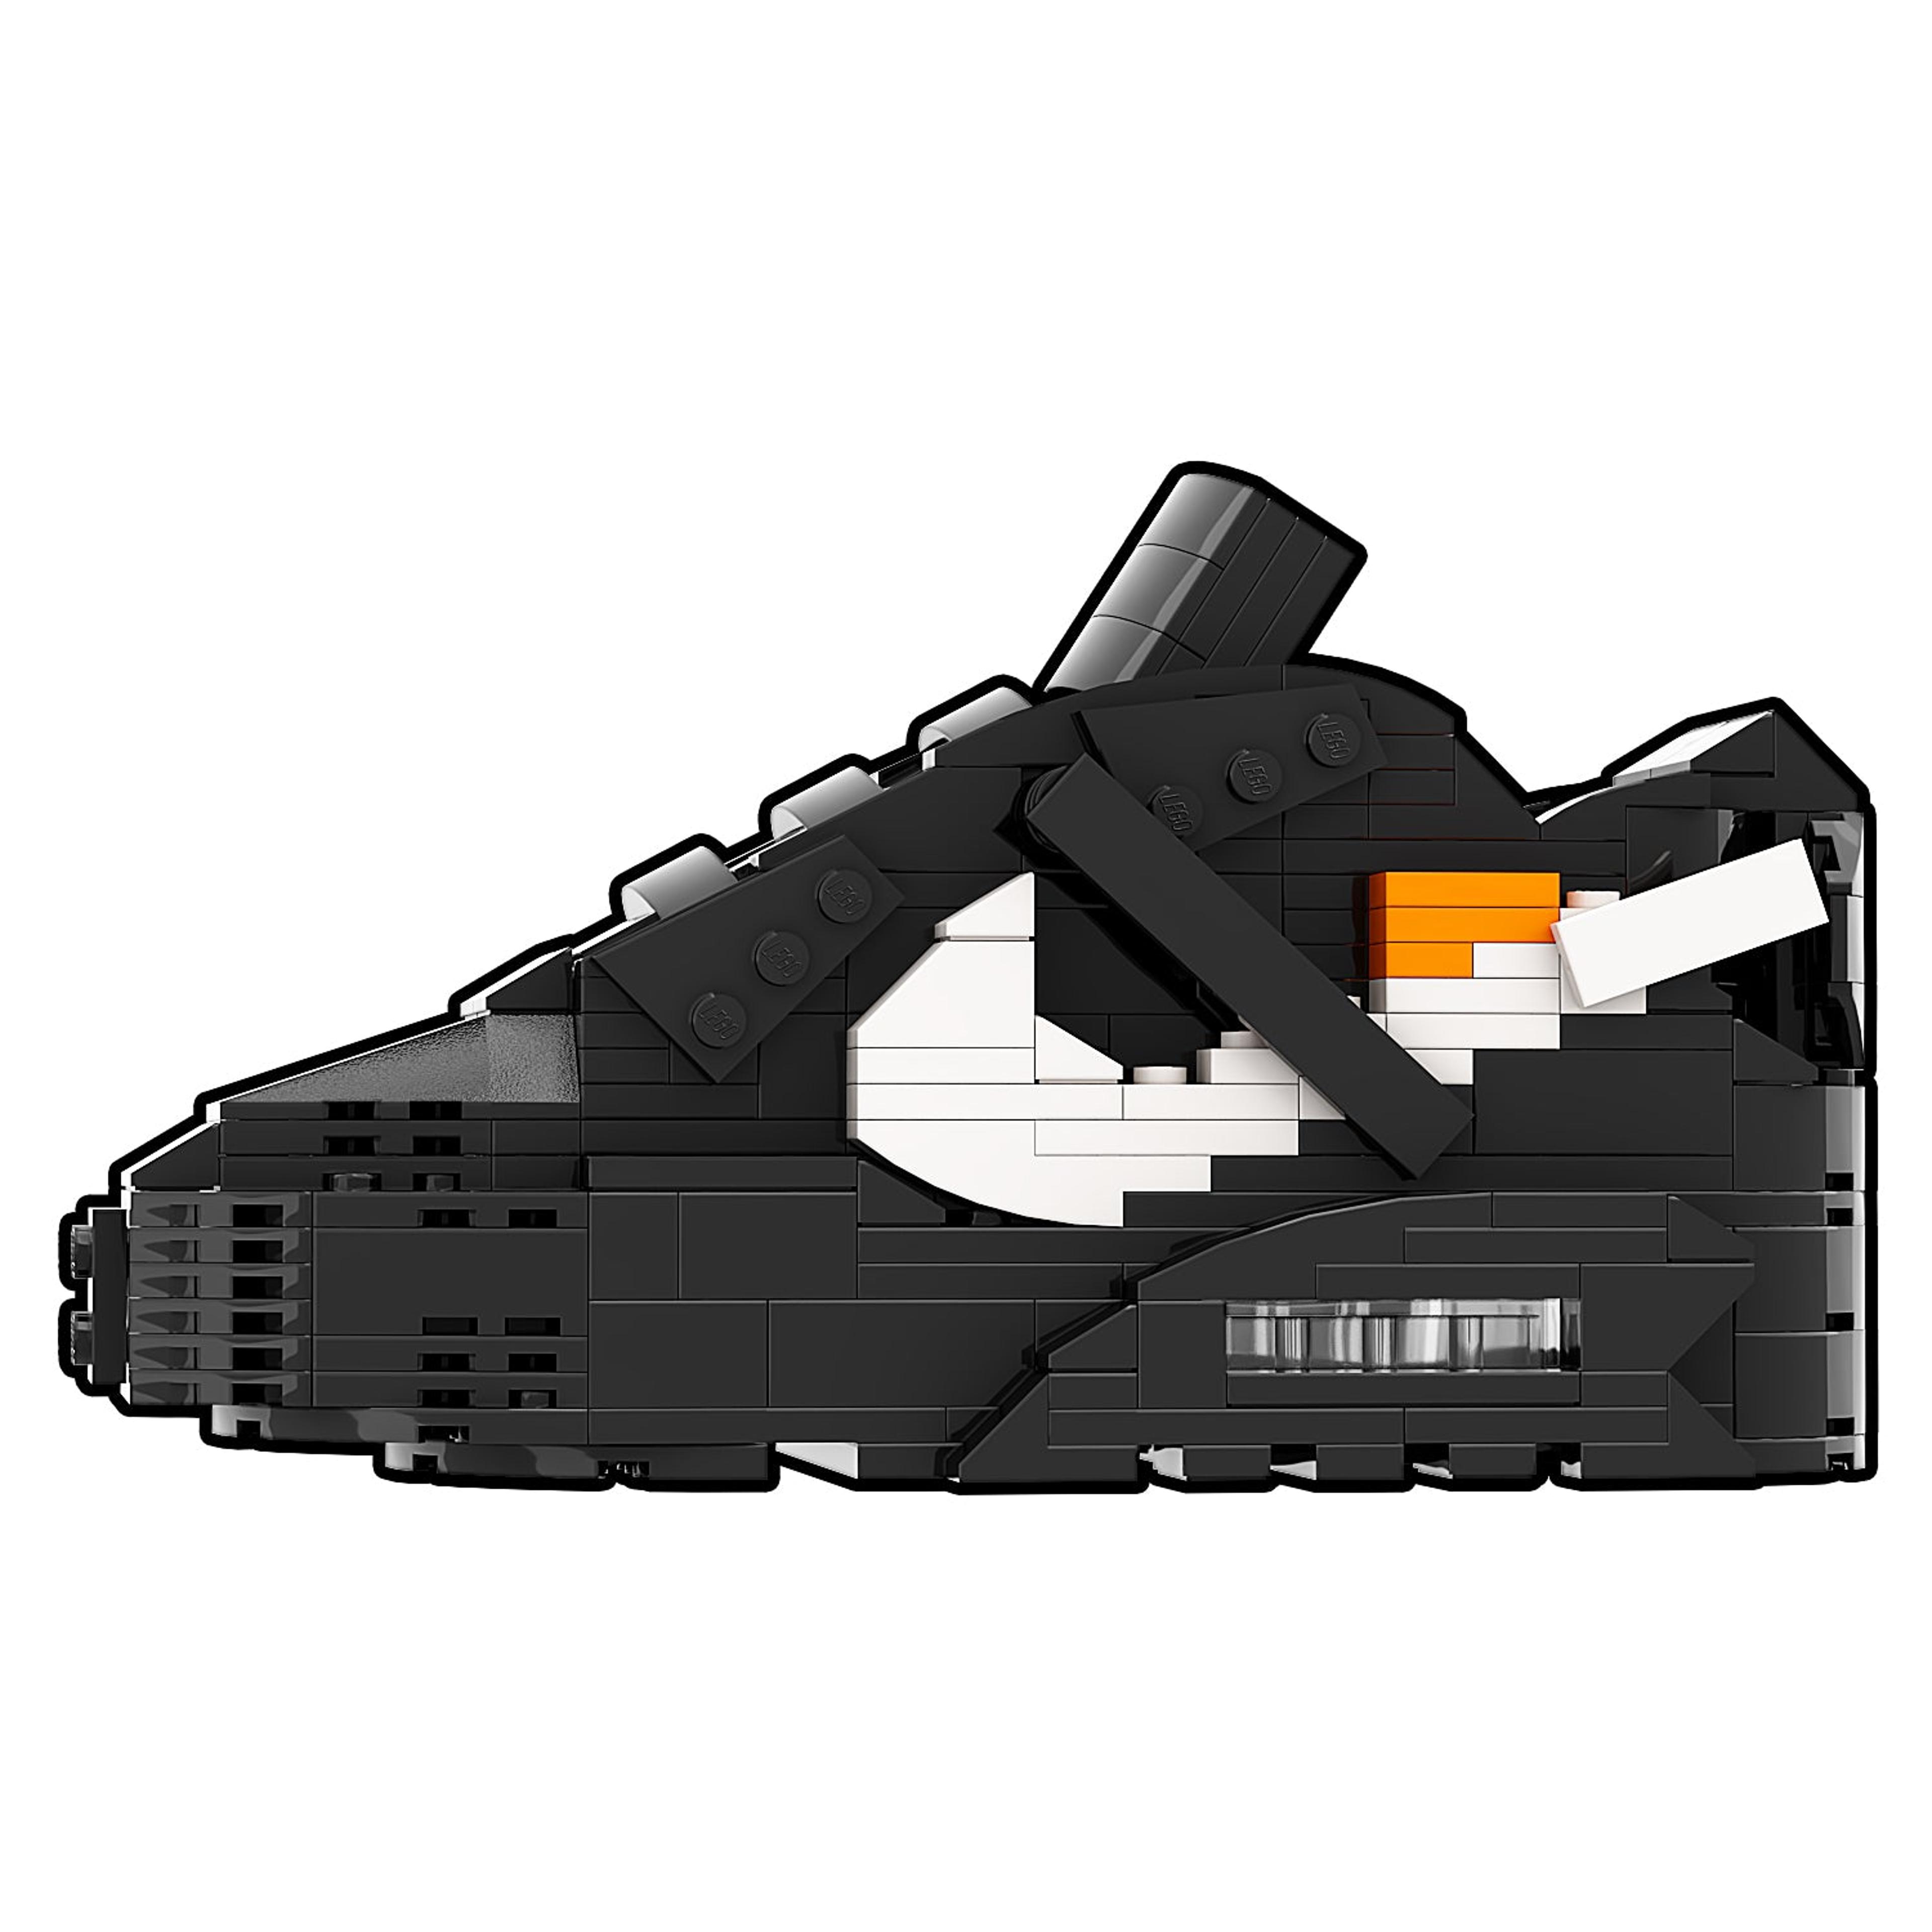 Alternate View 1 of REGULAR Air Max 90 "Off-White Black" Sneaker Bricks with Mini Fi